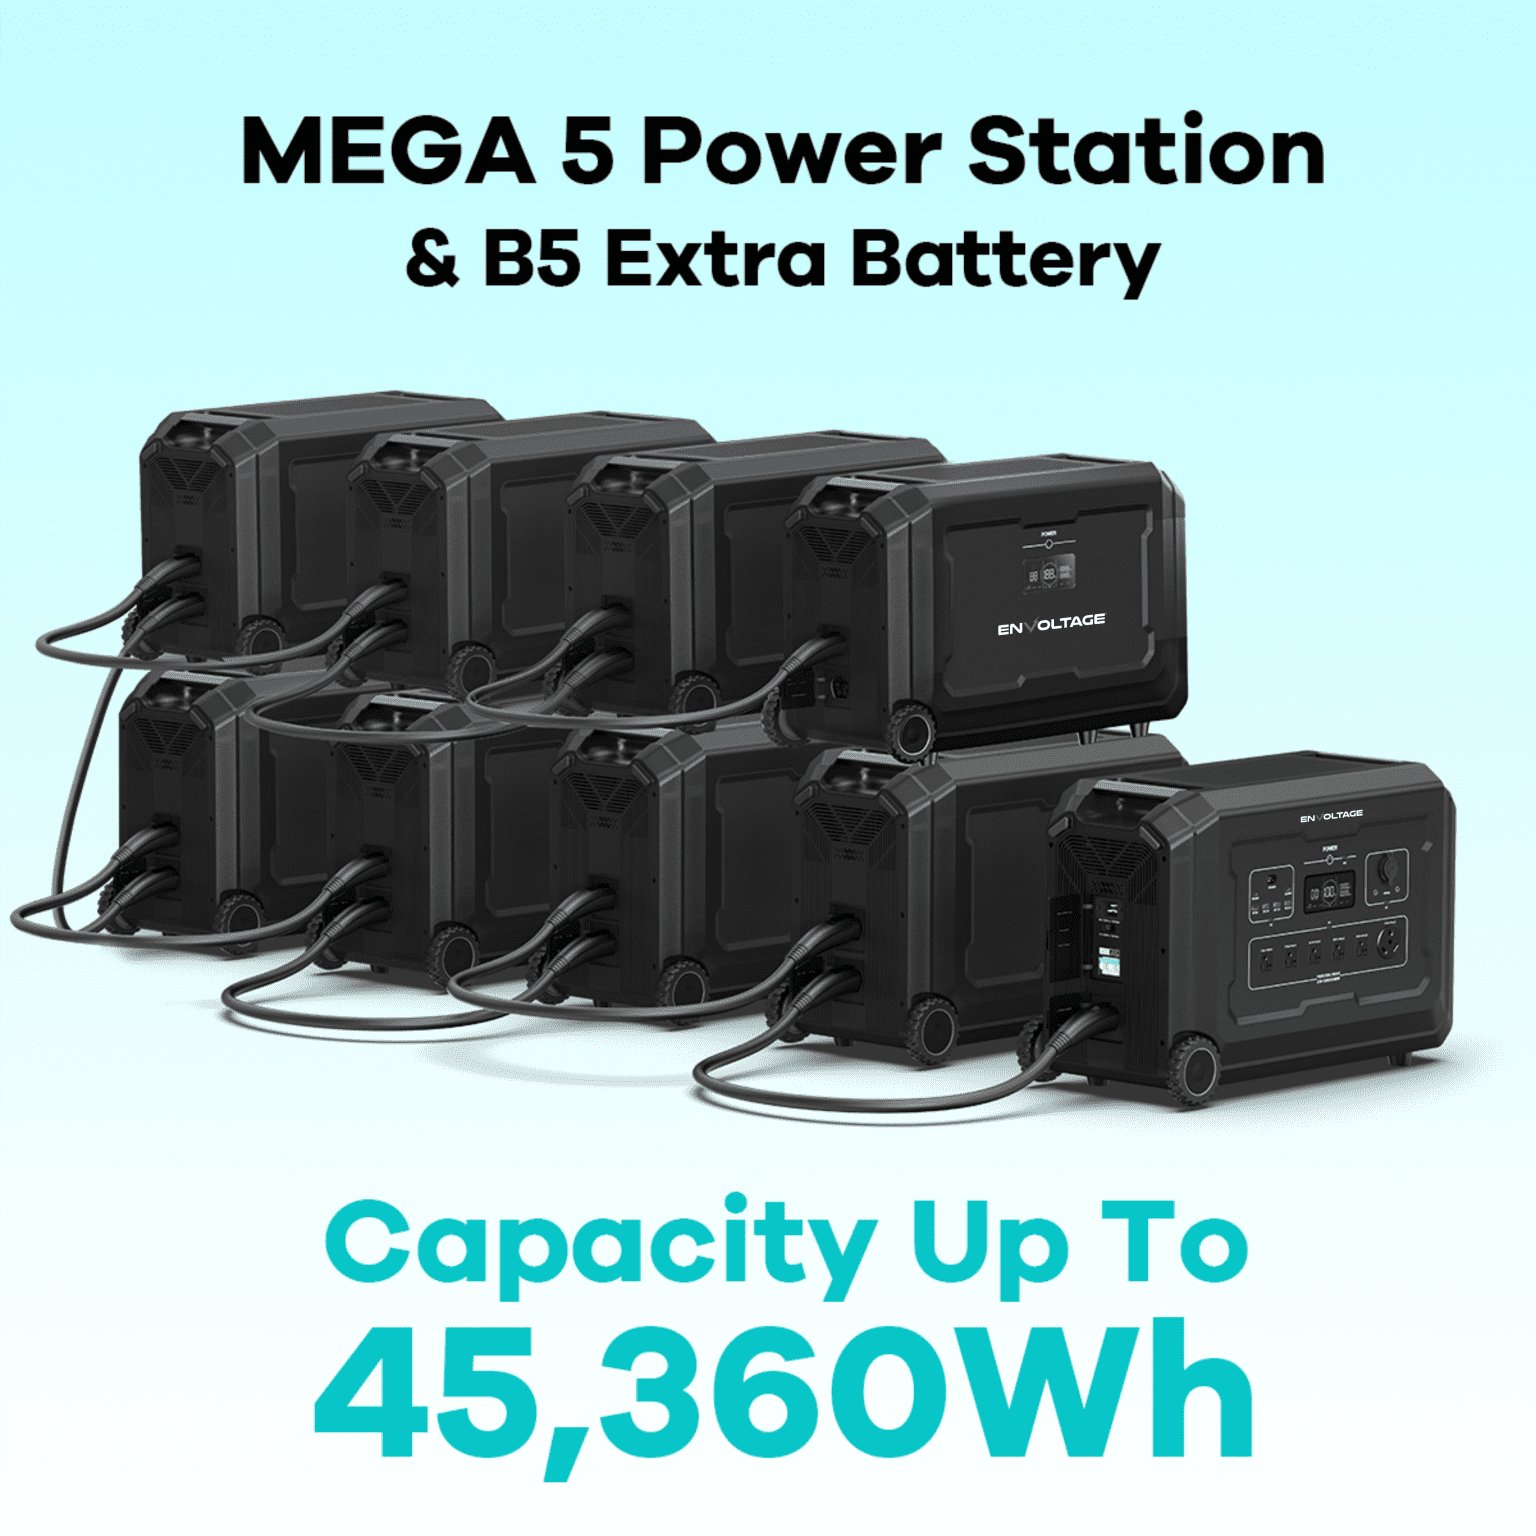 Mega 5 power station capacity